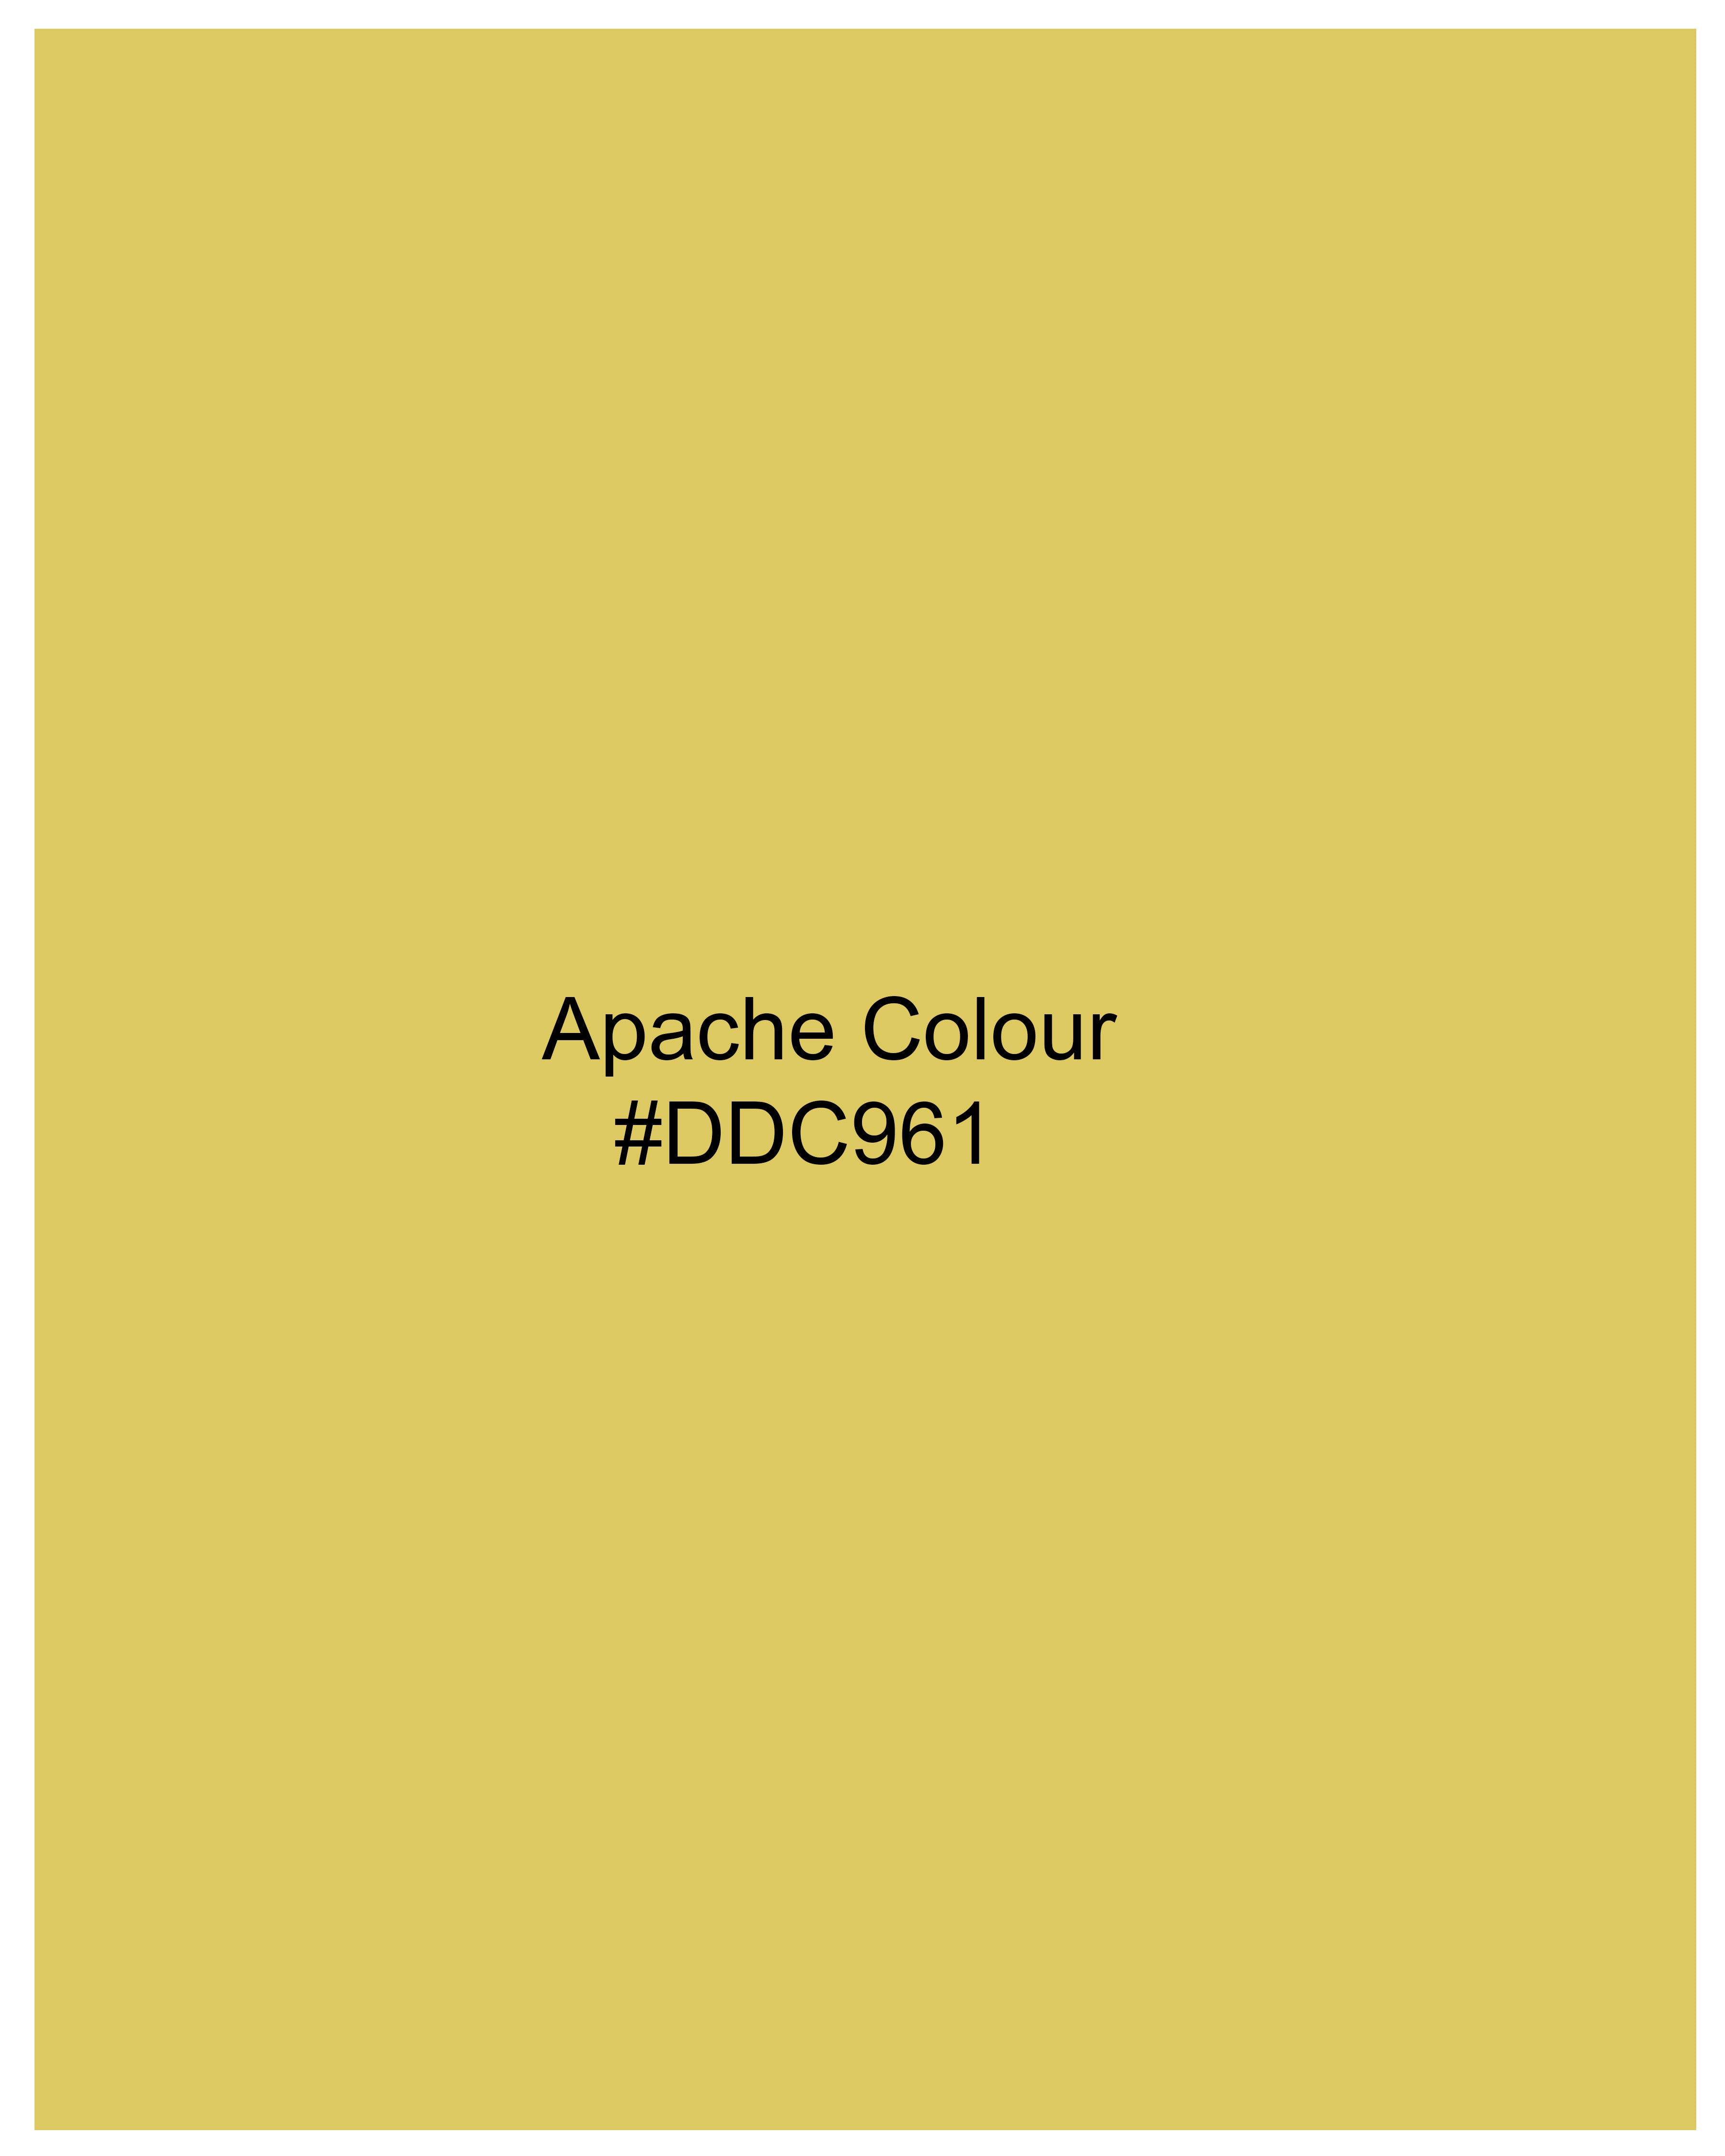 Apache Yellow Super Soft Designer Shirt 9272-SS-P350-38,9272-SS-P350-39,9272-SS-P350-40,9272-SS-P350-42,9272-SS-P350-44,9272-SS-P350-46,9272-SS-P350-48,9272-SS-P350-50,9272-SS-P350-52 